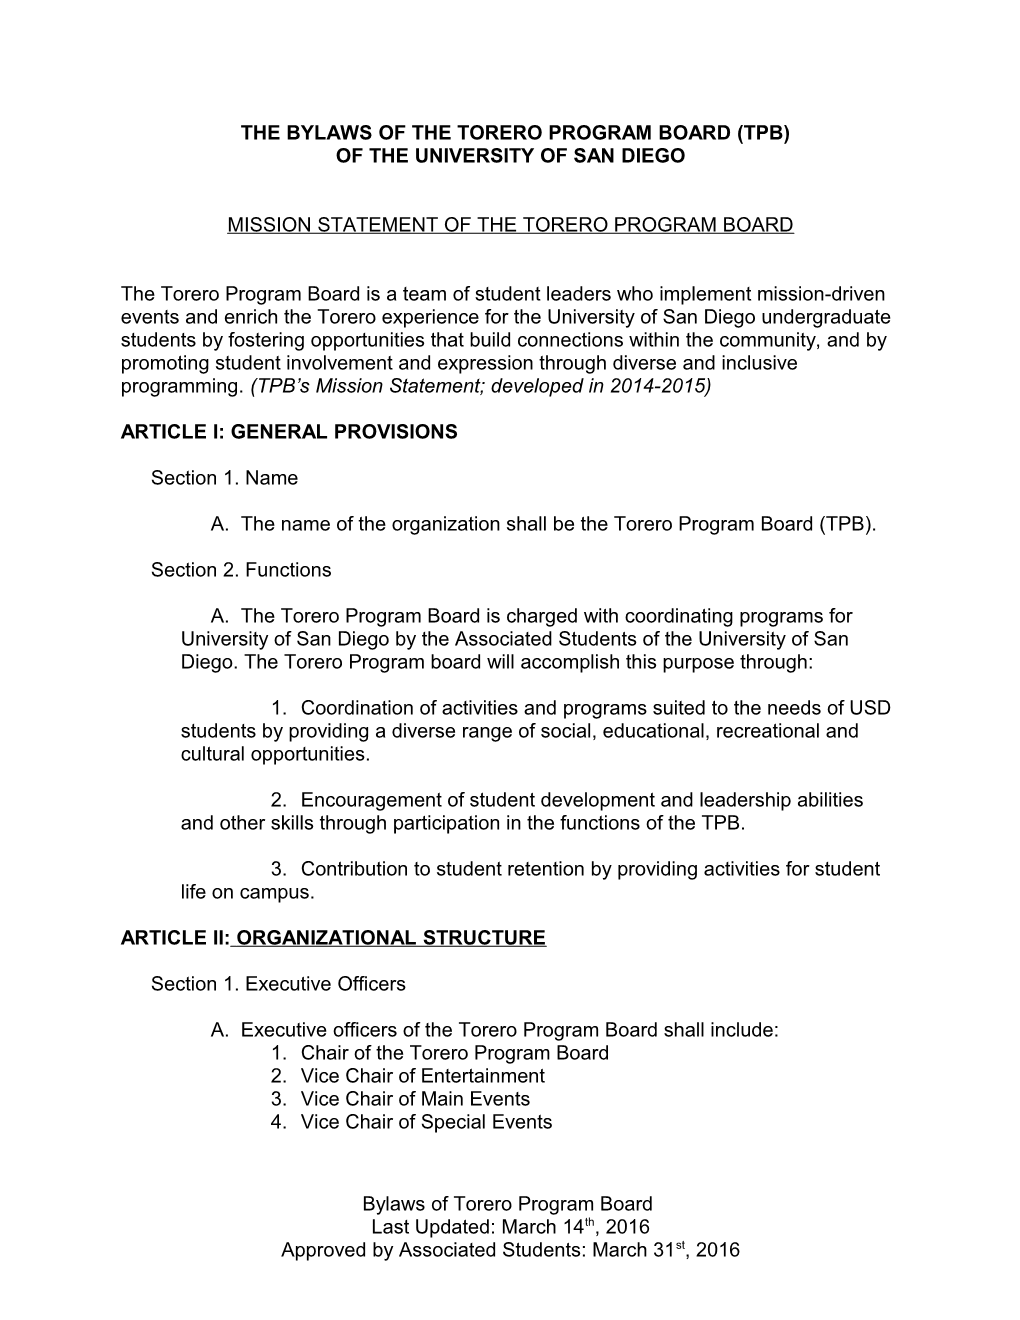 The Bylaws of the Torero Program Board (Tpb)